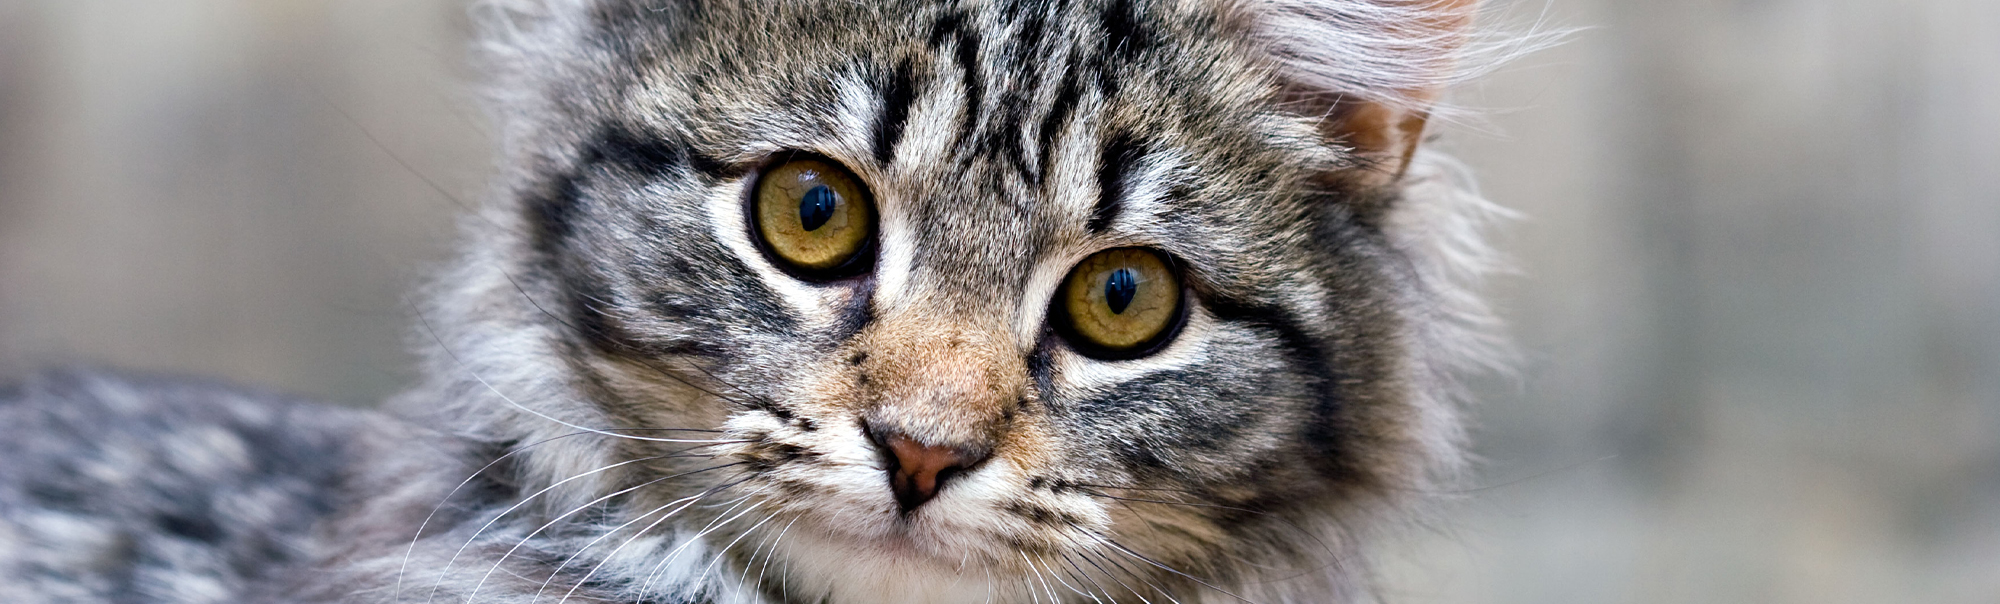 Background 1 - Cat